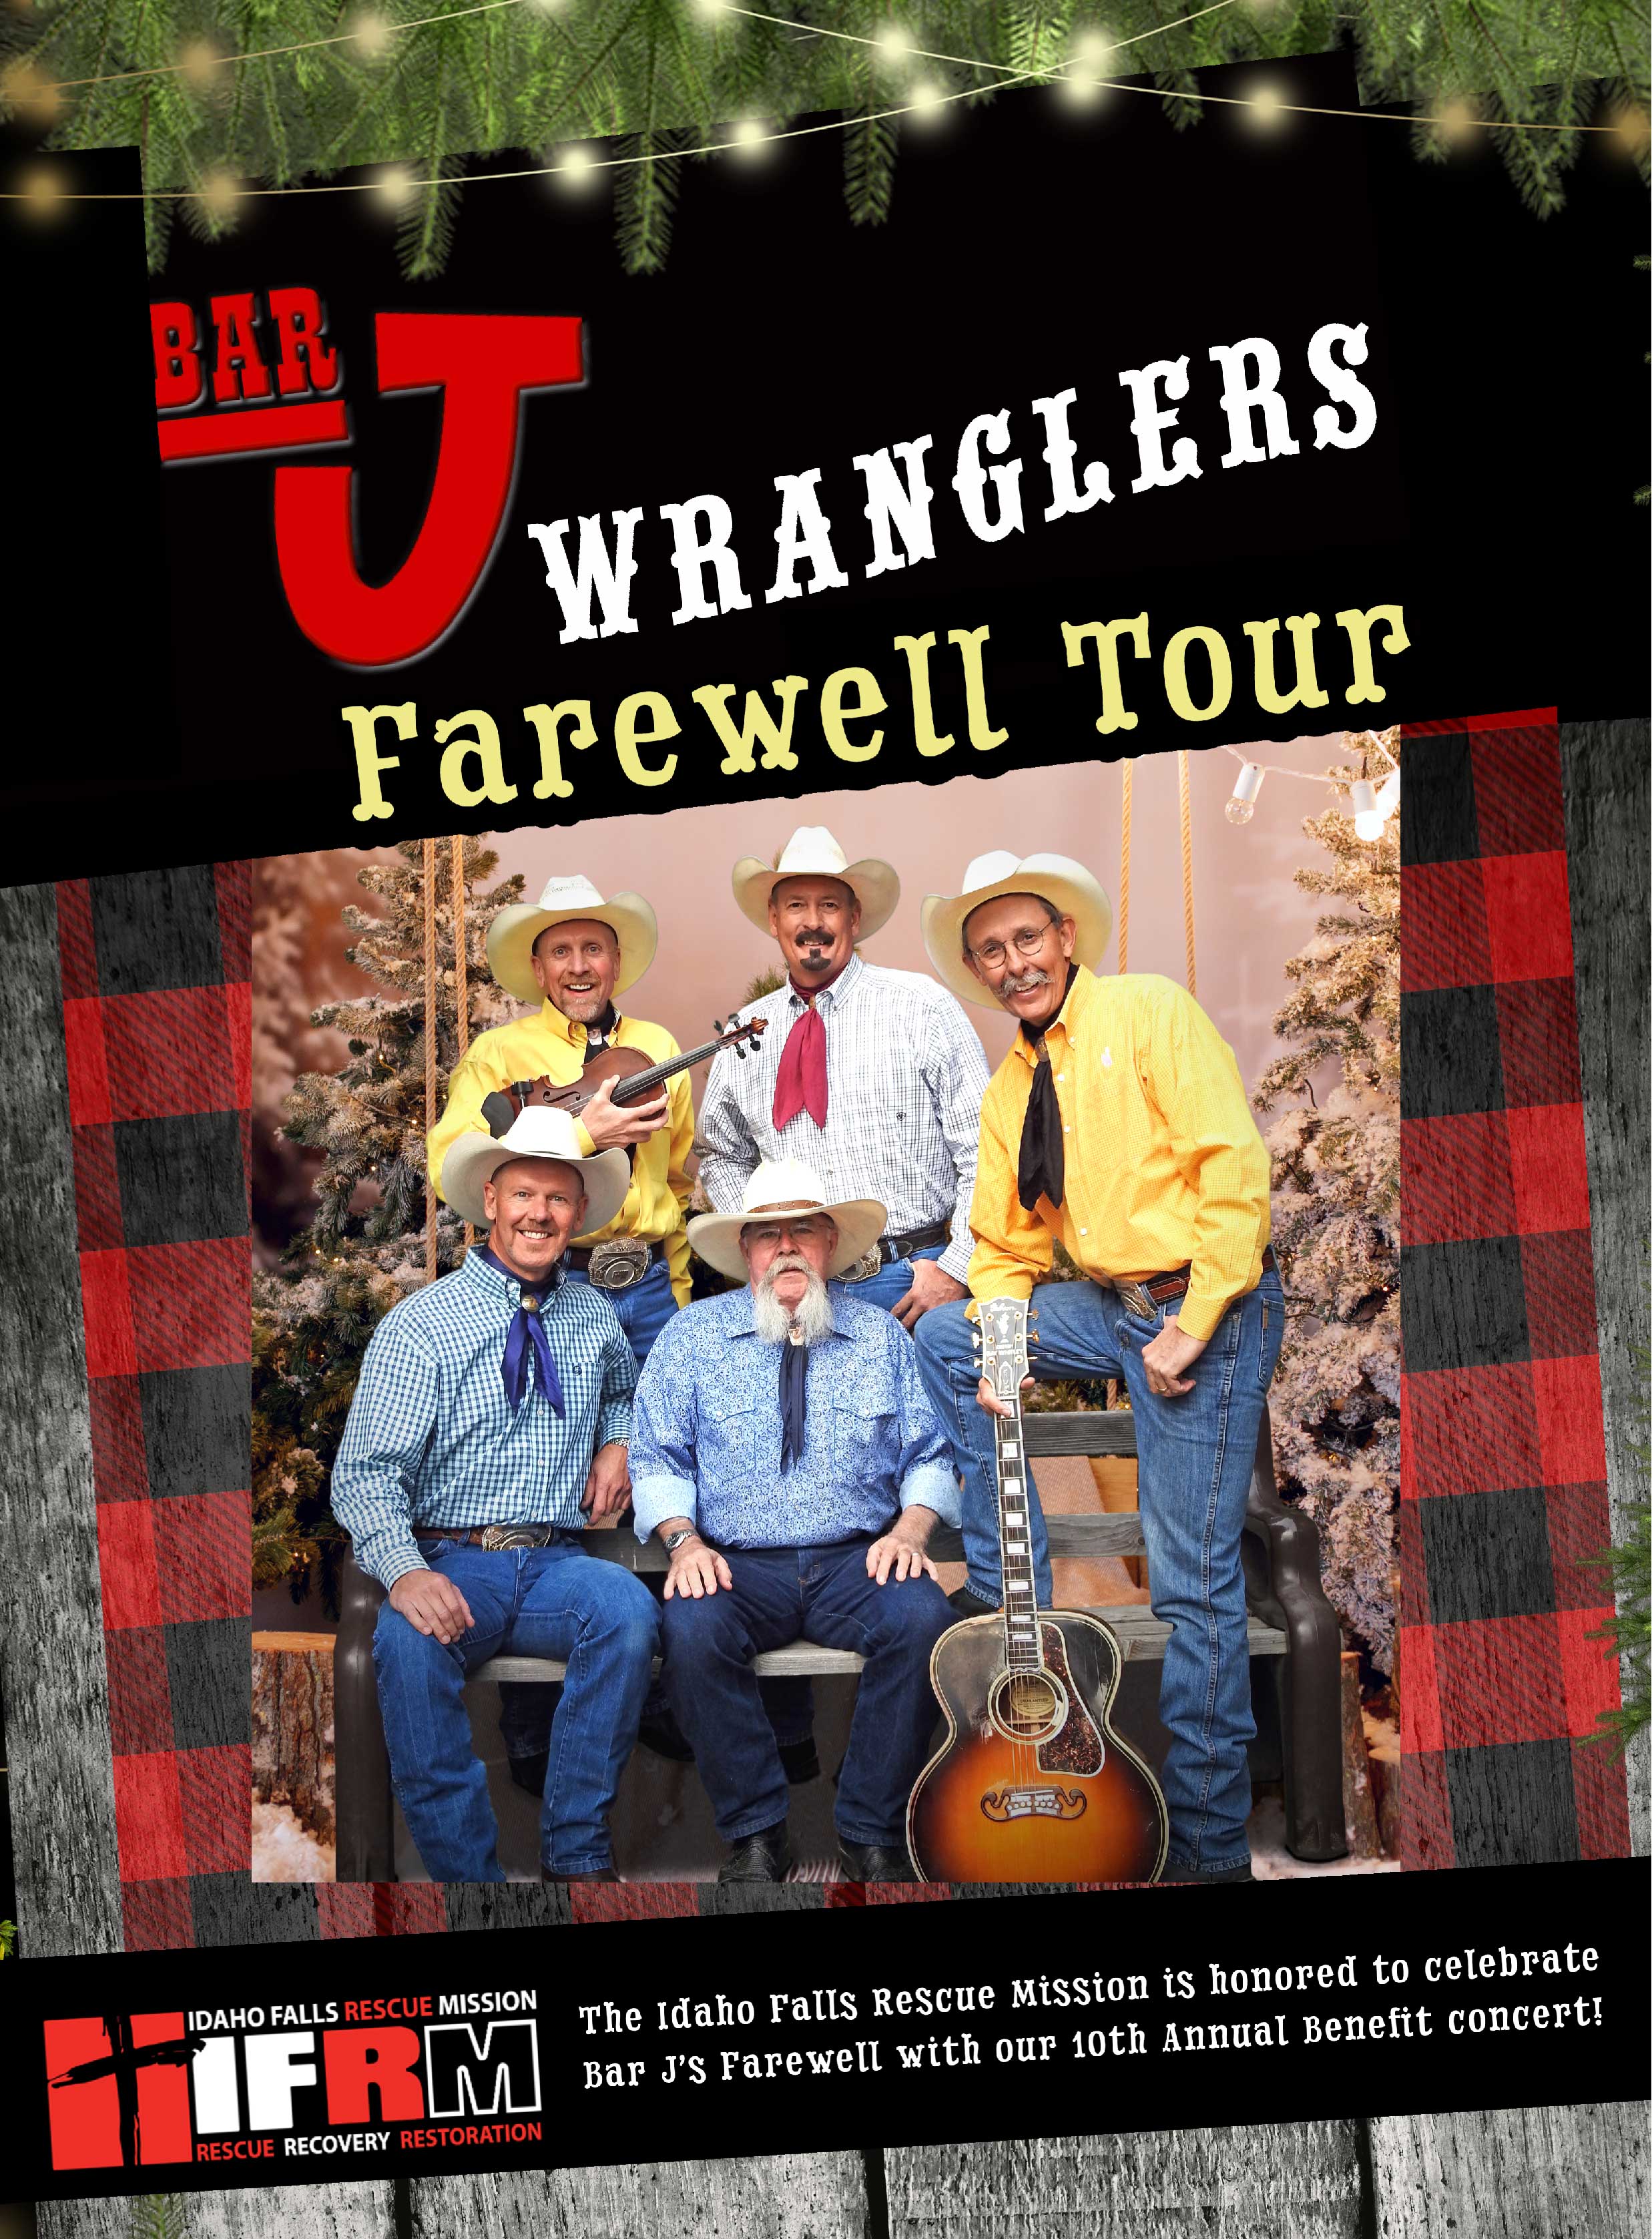 bar j wranglers farewell tour schedule